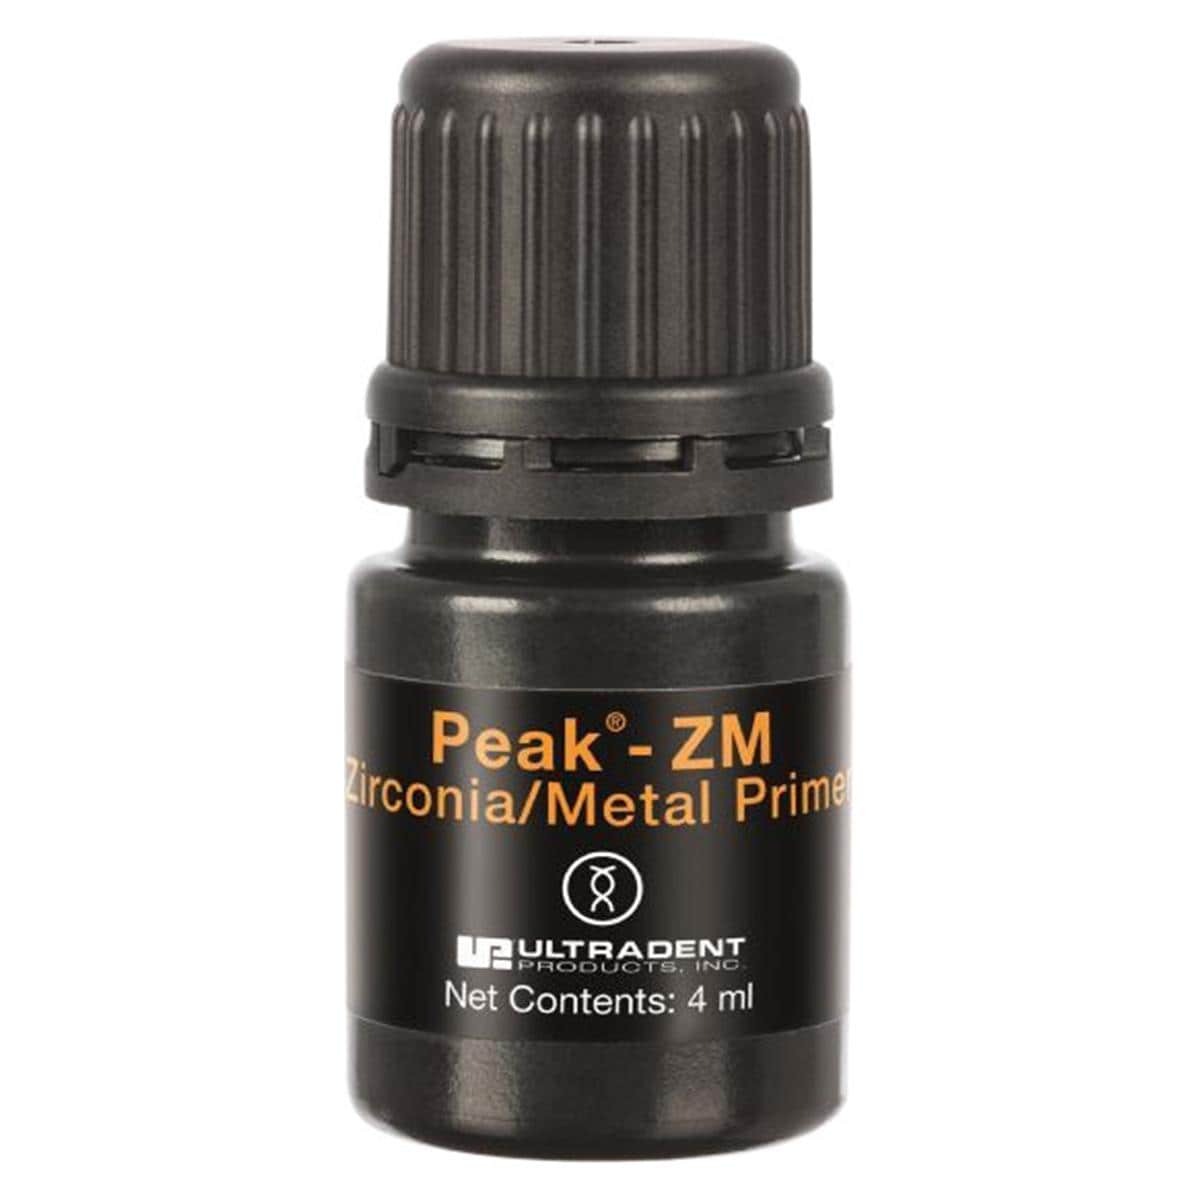 Peak-ZM zirconia-metal primer - Flacon, 4 ml - 2463